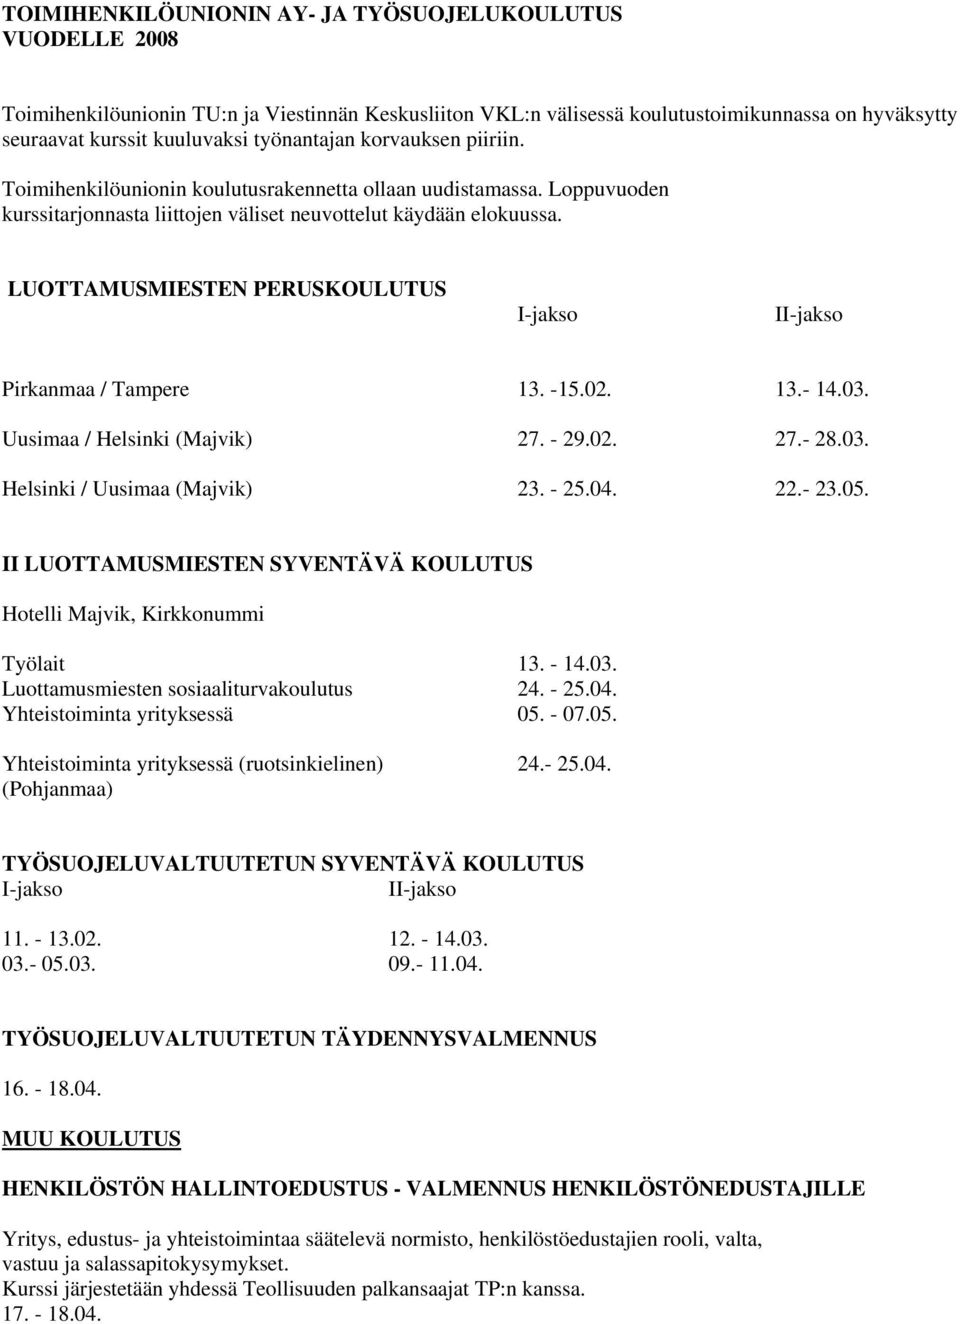 LUOTTAMUSMIESTEN PERUSKOULUTUS I-jakso II-jakso Pirkanmaa / Tampere 13. -15.02. 13.- 14.03. Uusimaa / Helsinki (Majvik) 27. - 29.02. 27.- 28.03. Helsinki / Uusimaa (Majvik) 23. - 25.04. 22.- 23.05.